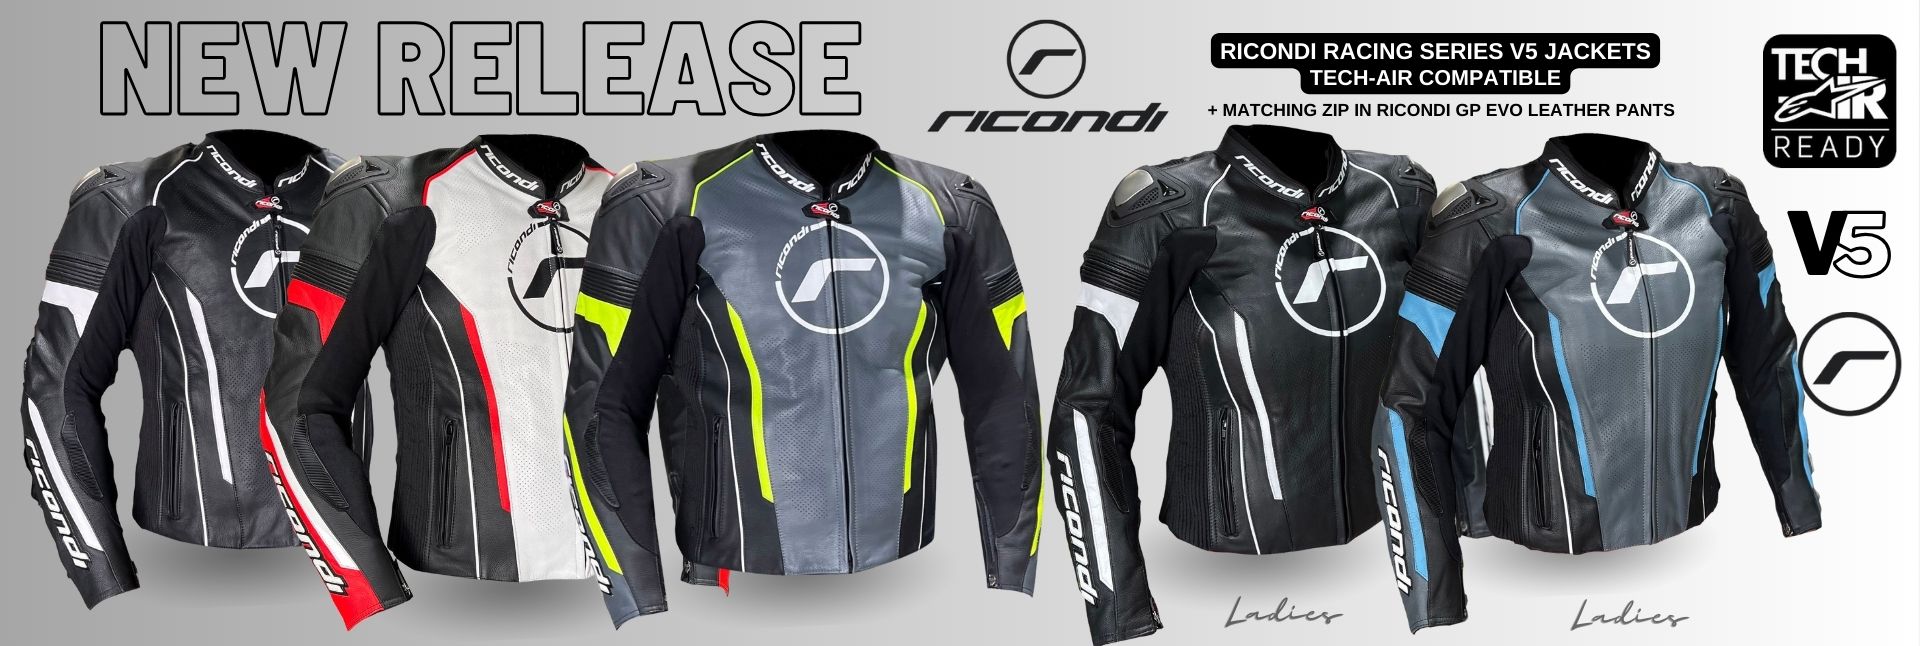 NEW Release Ricondi V5 Jackets